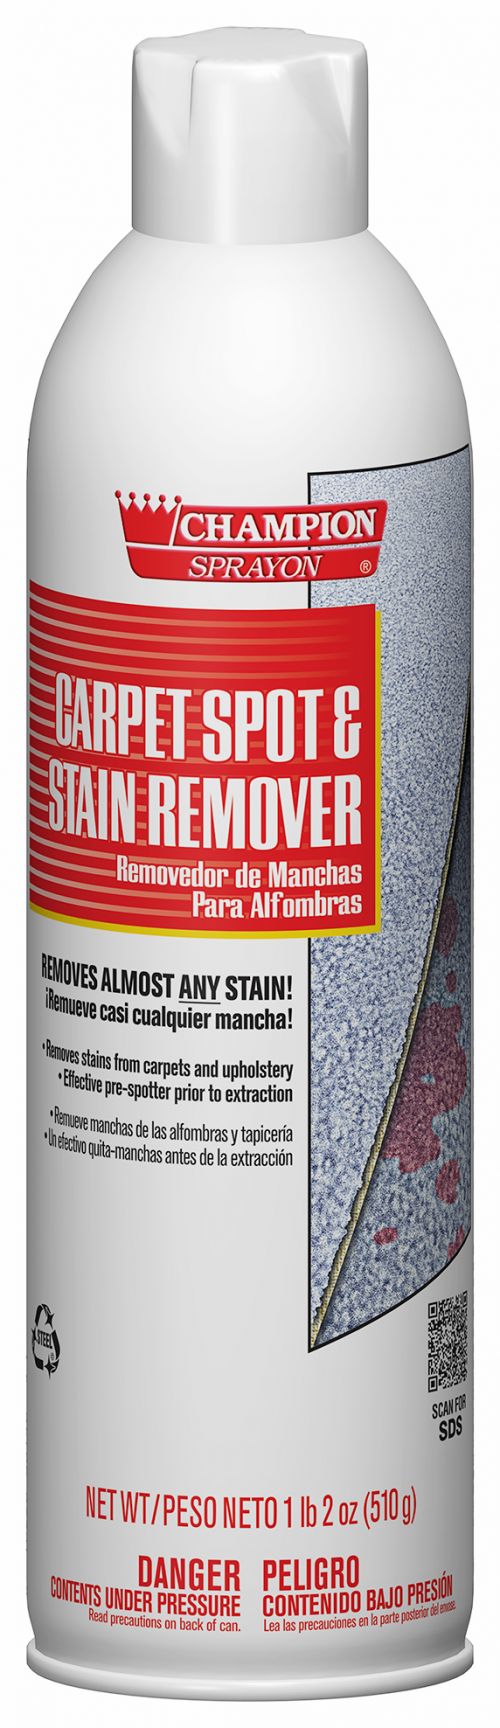 Aerosol Carpet Spot & Stain Remover